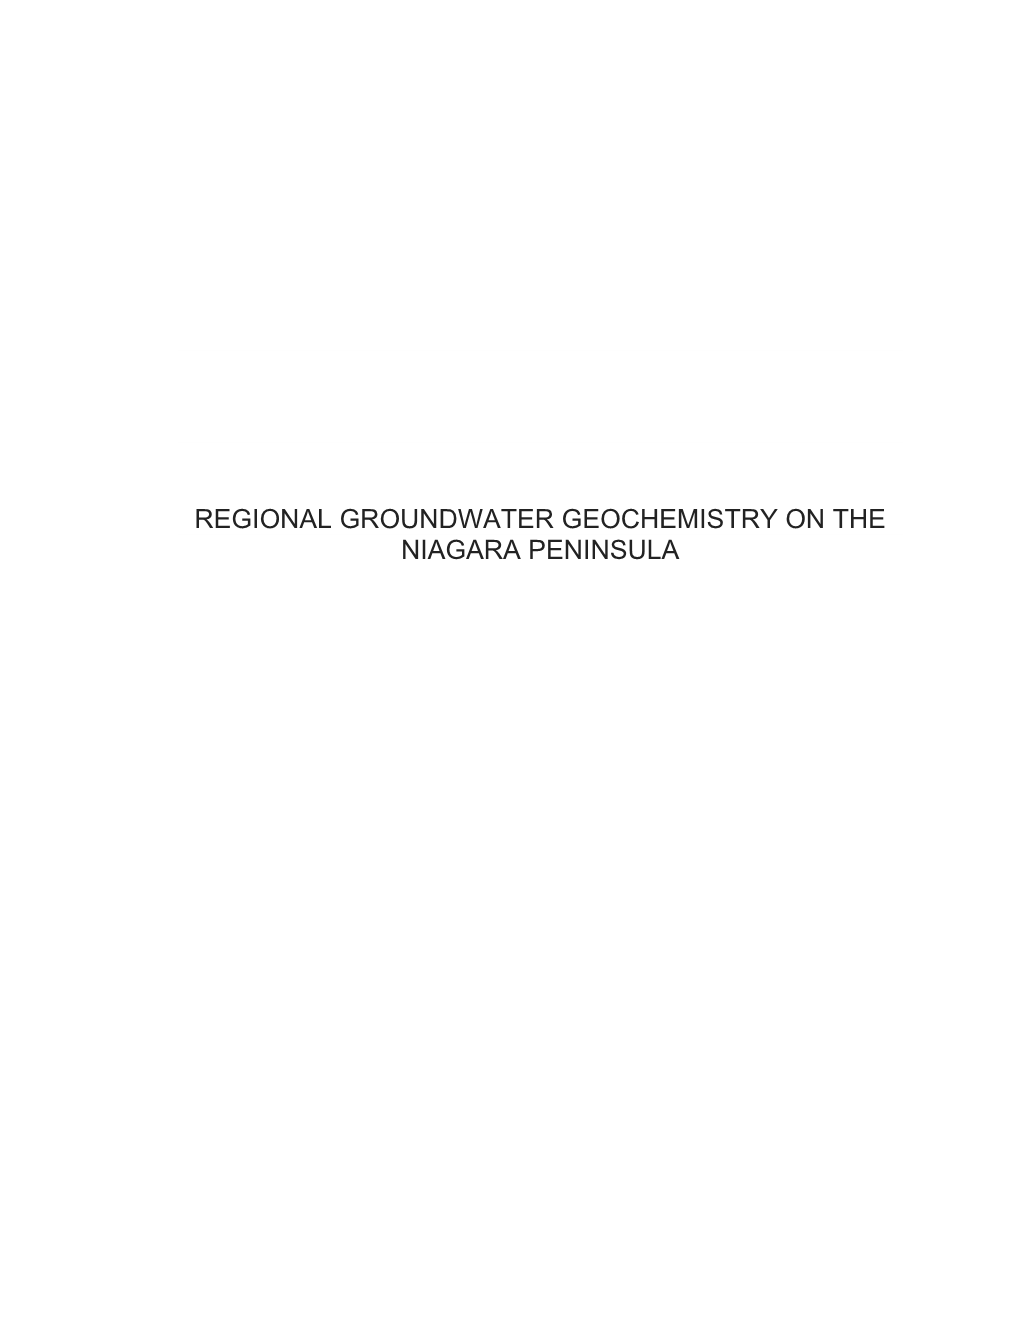 Regional Groundwater Geochemistry on the Niagara Peninsula